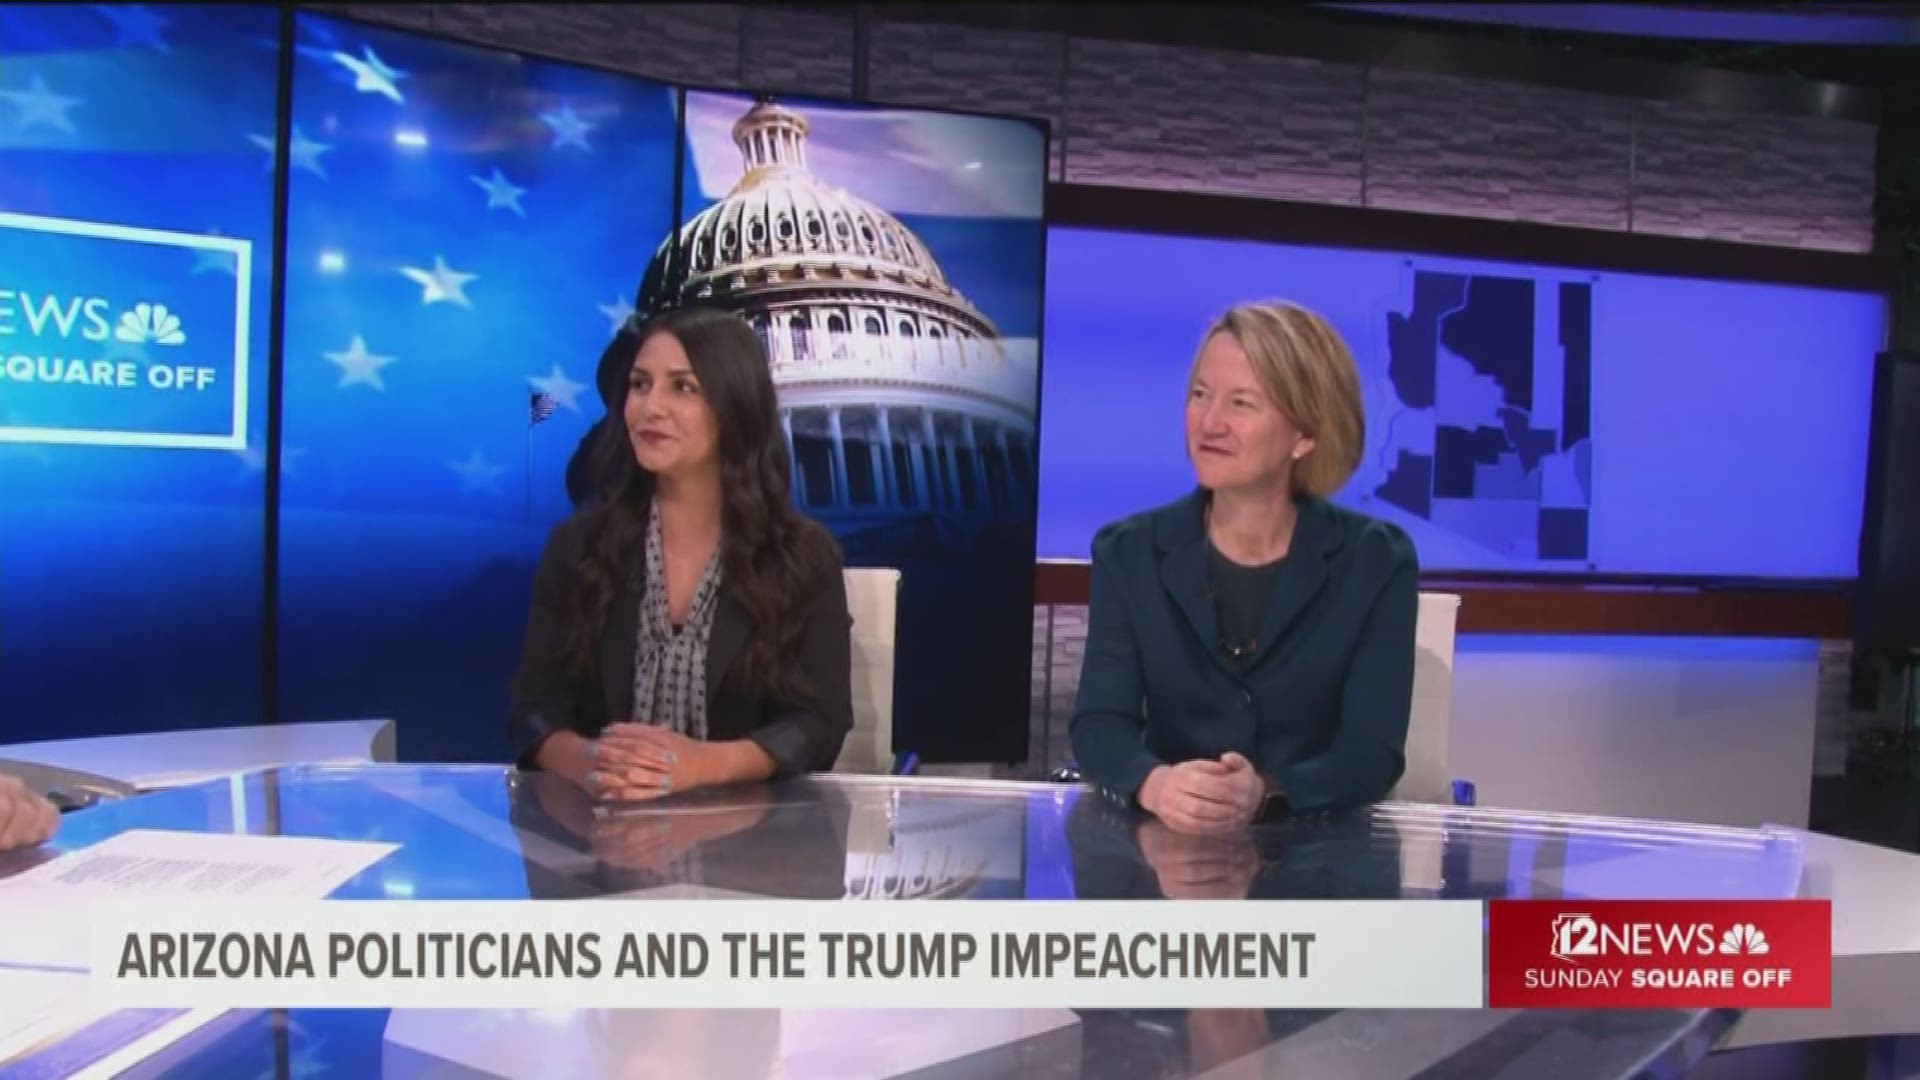 We break down the verdicts from Democratic Sen. Kyrsten Sinema and Republican Sen. Martha McSally in President Trump’s impeachment trial.